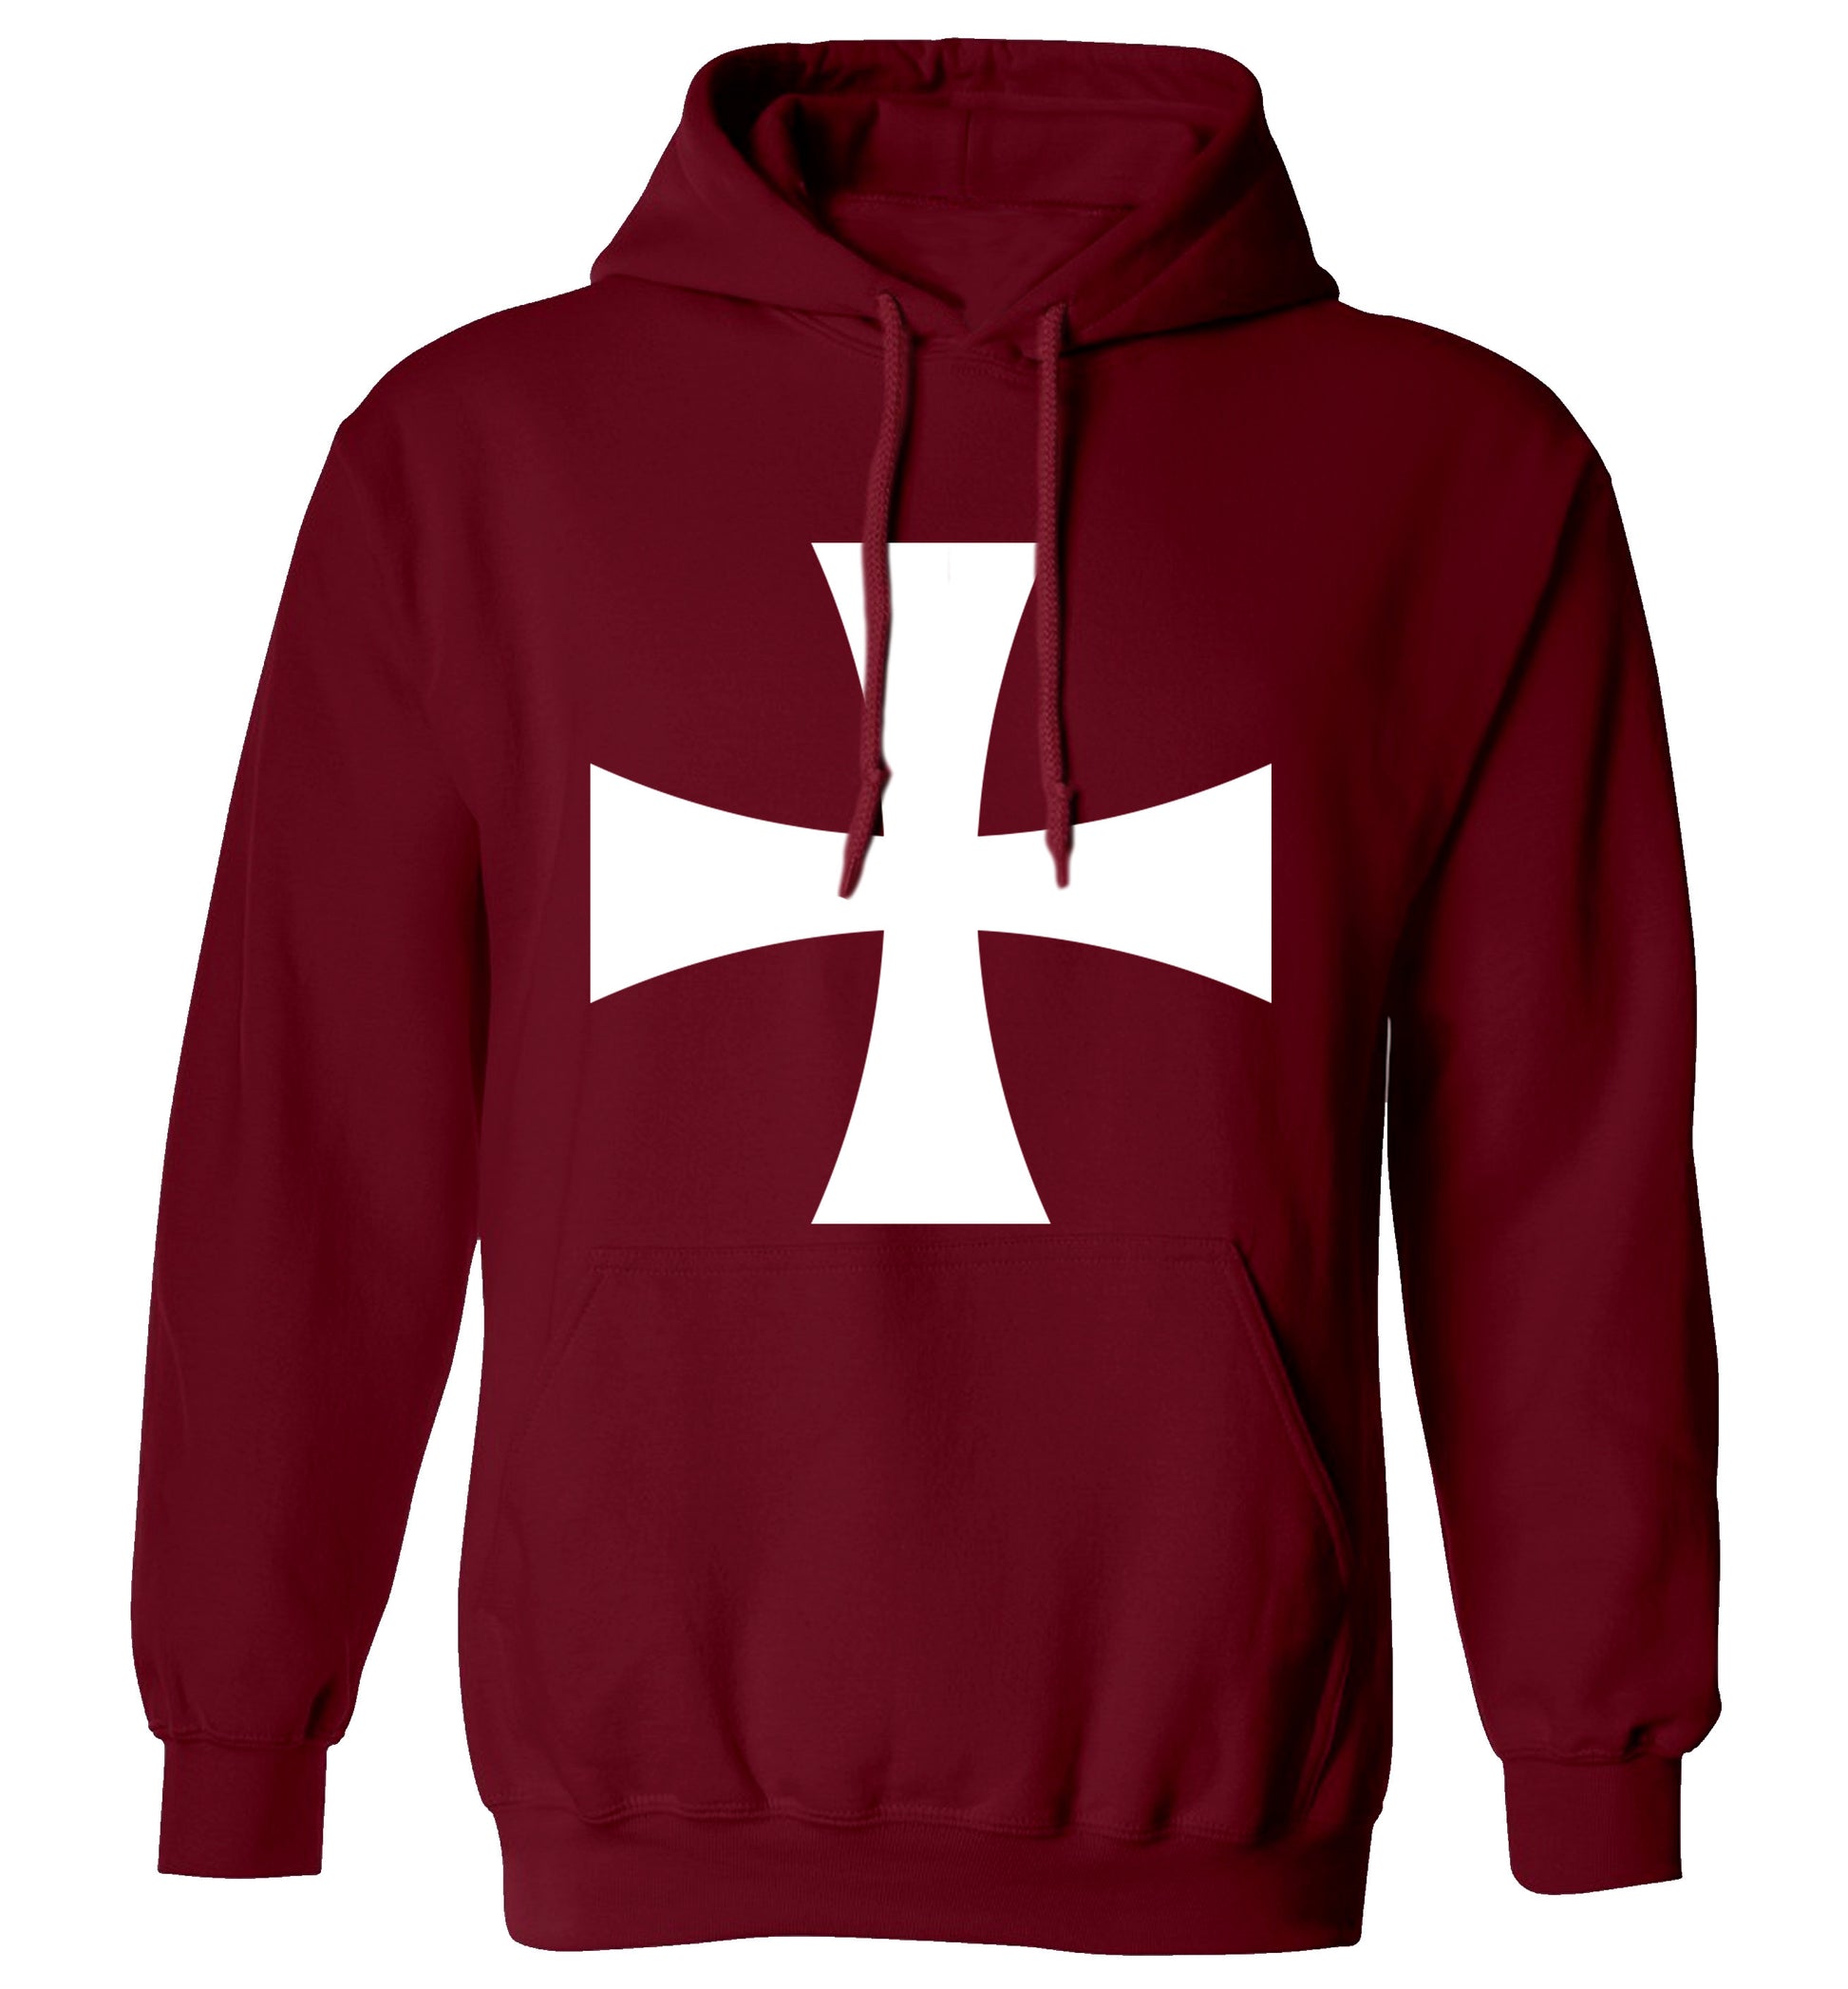 Knights Templar cross adults unisex maroon hoodie 2XL